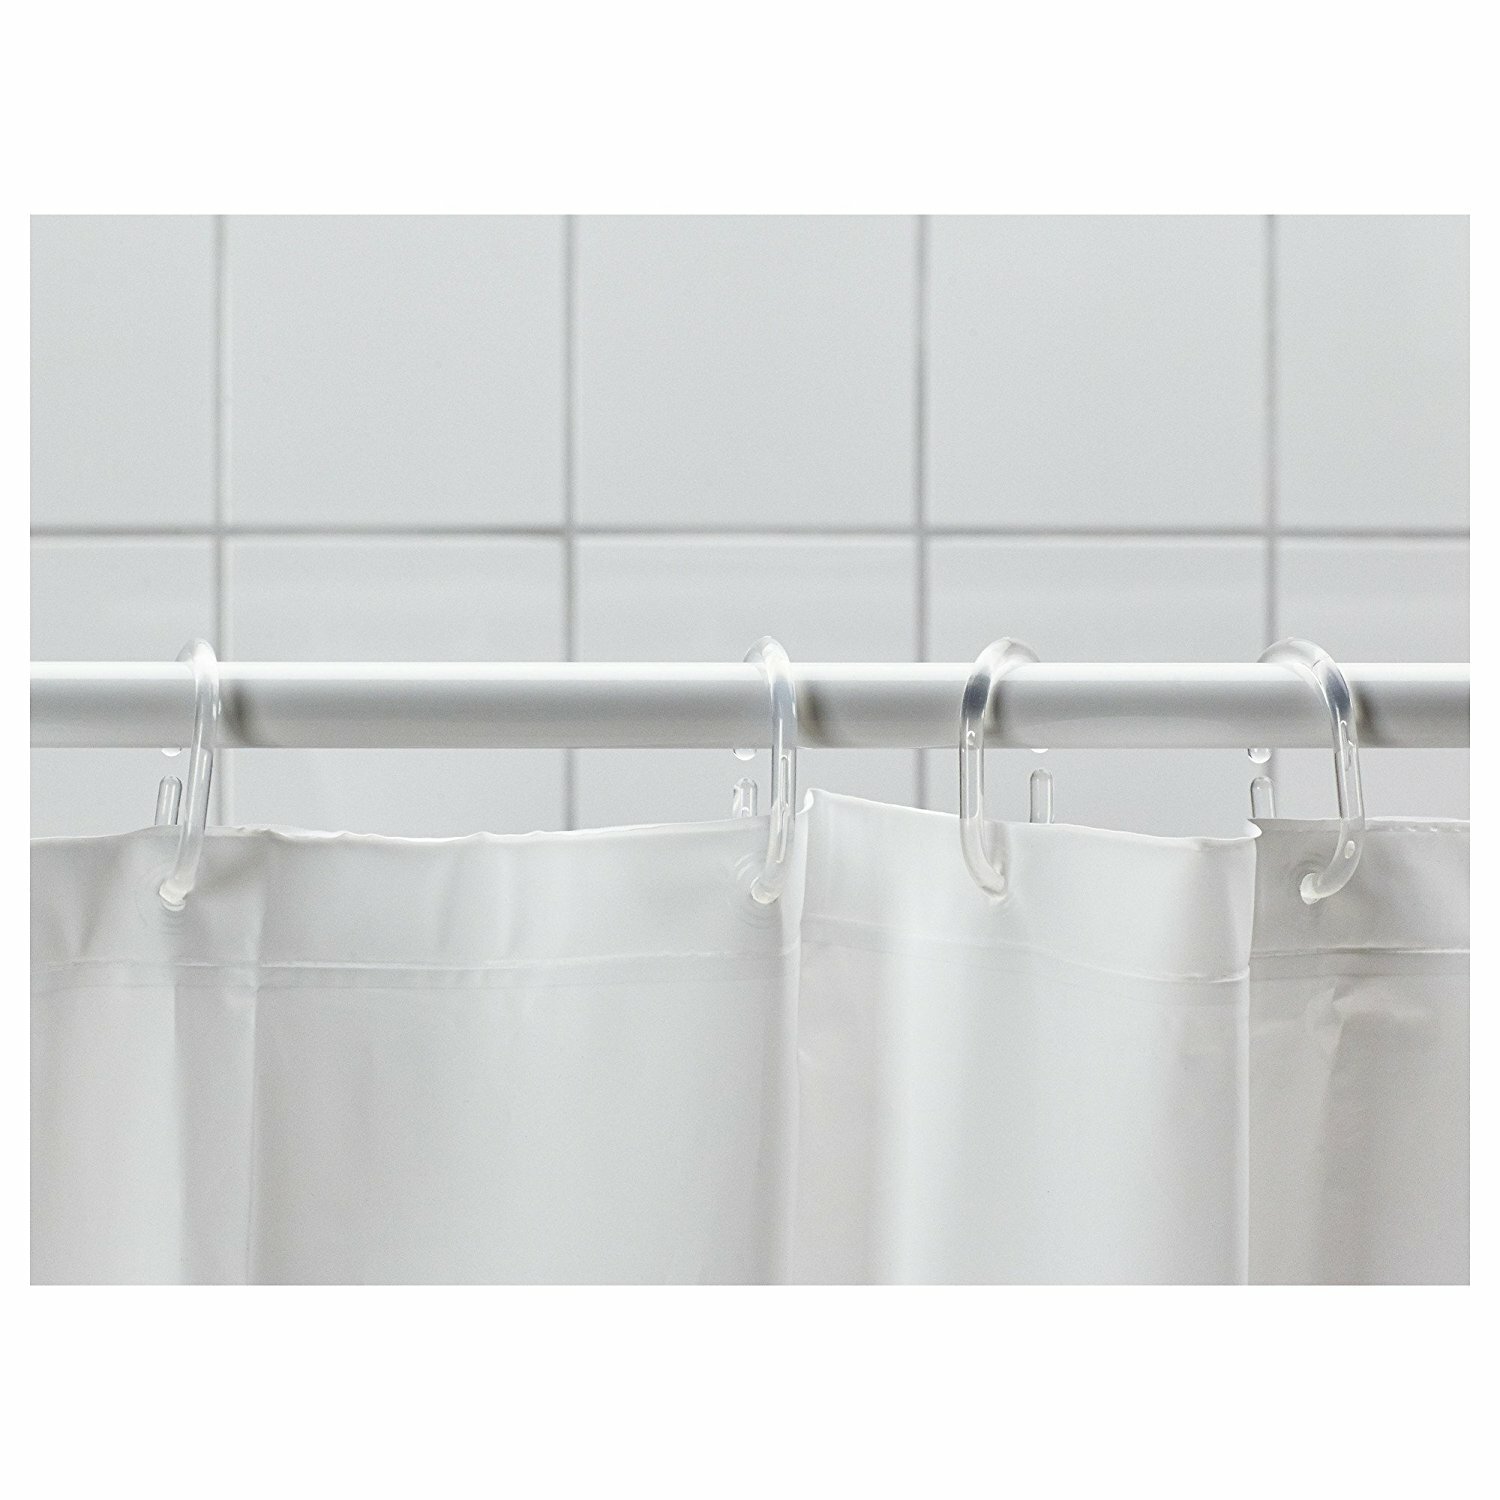 Spring Loaded Curtain Rod Ikea | Shower Curtain Length | Ikea Shower Curtain